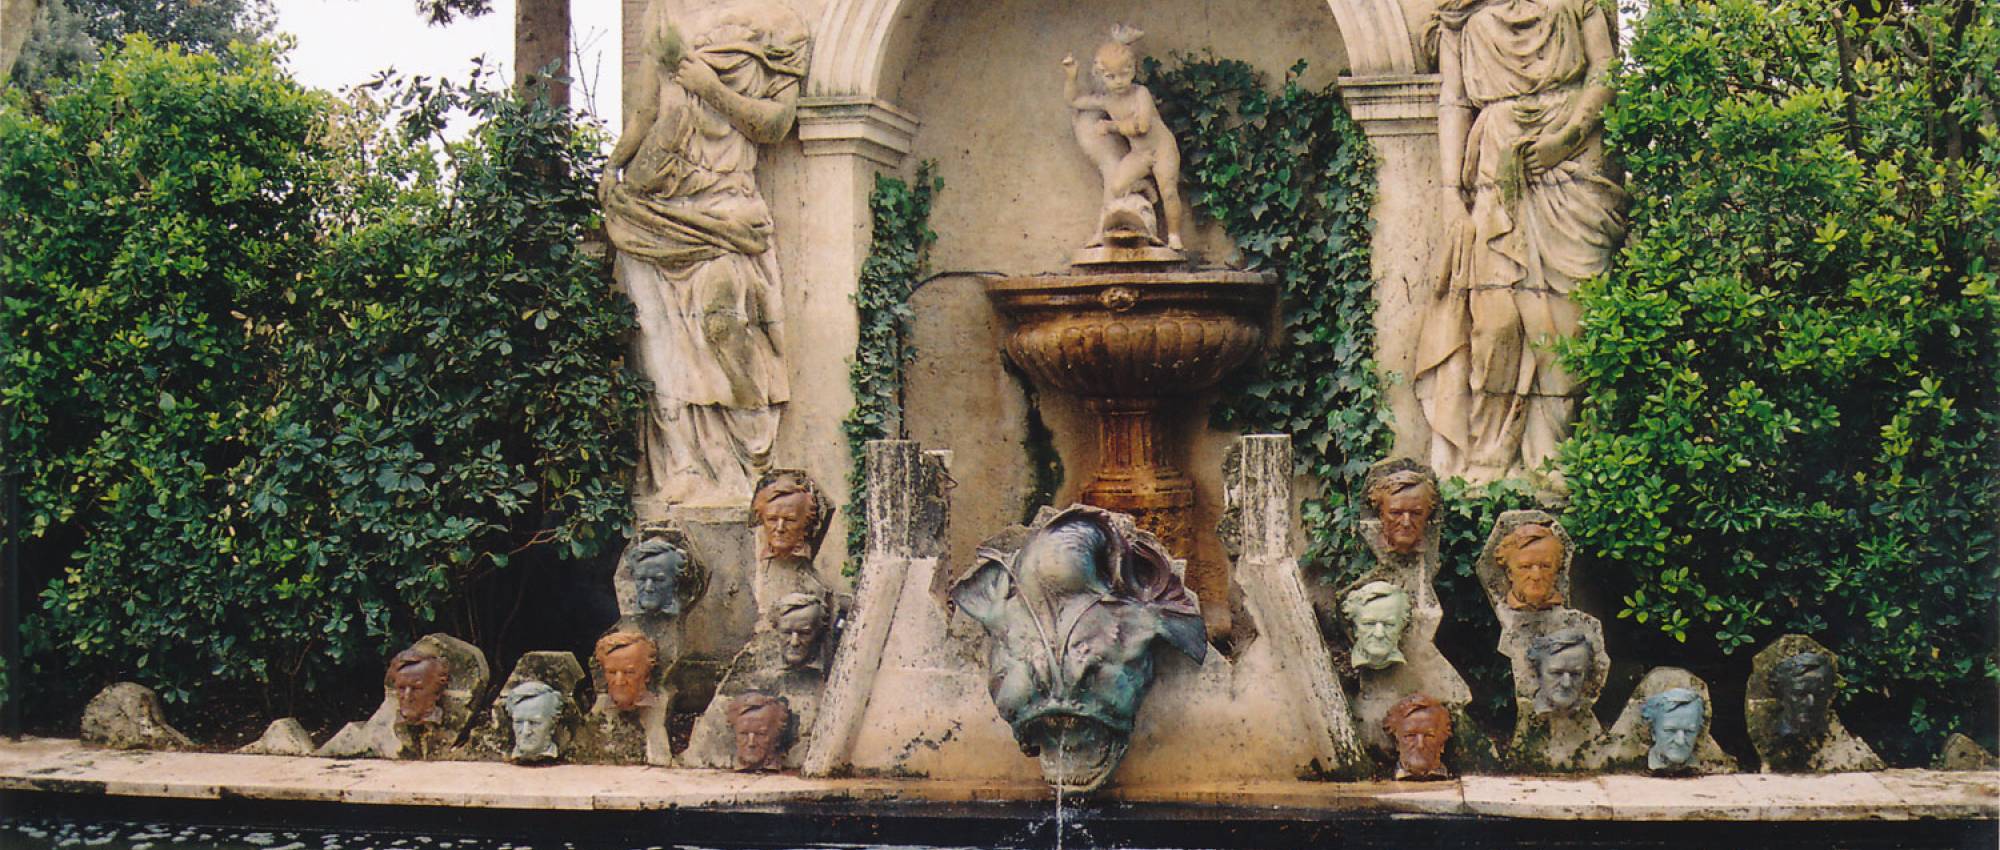 Font del jardí del castell de Púbol. Gordito1869 / Wikimedia Commons. CC BY 3.0